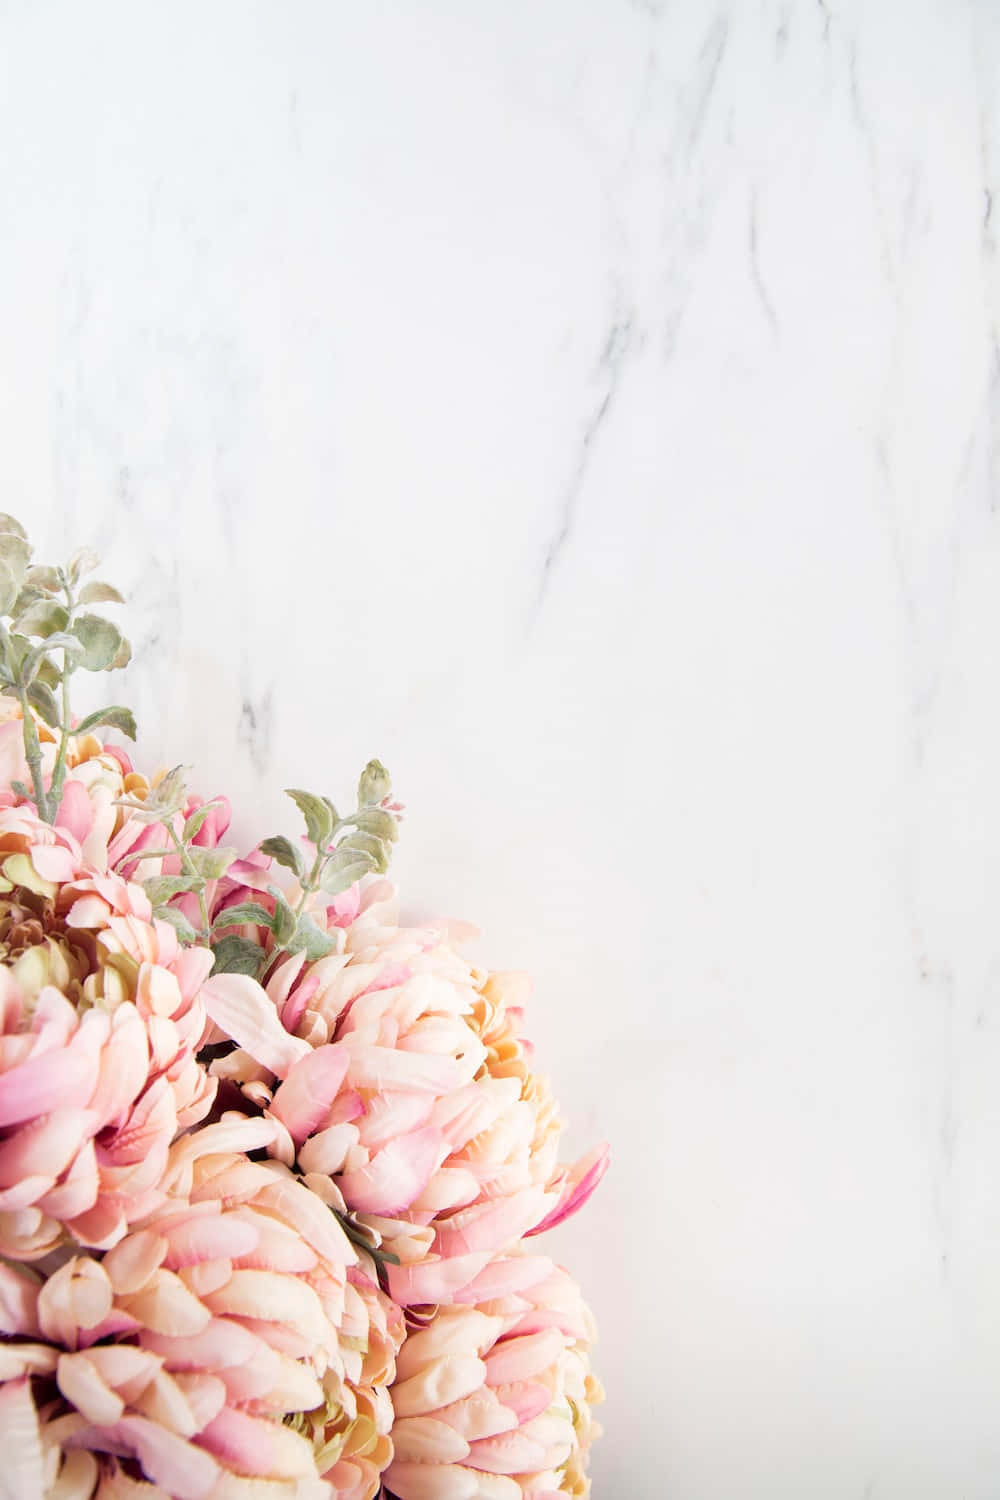 Exquisite Floral Arrangement on Pastel Background Wallpaper